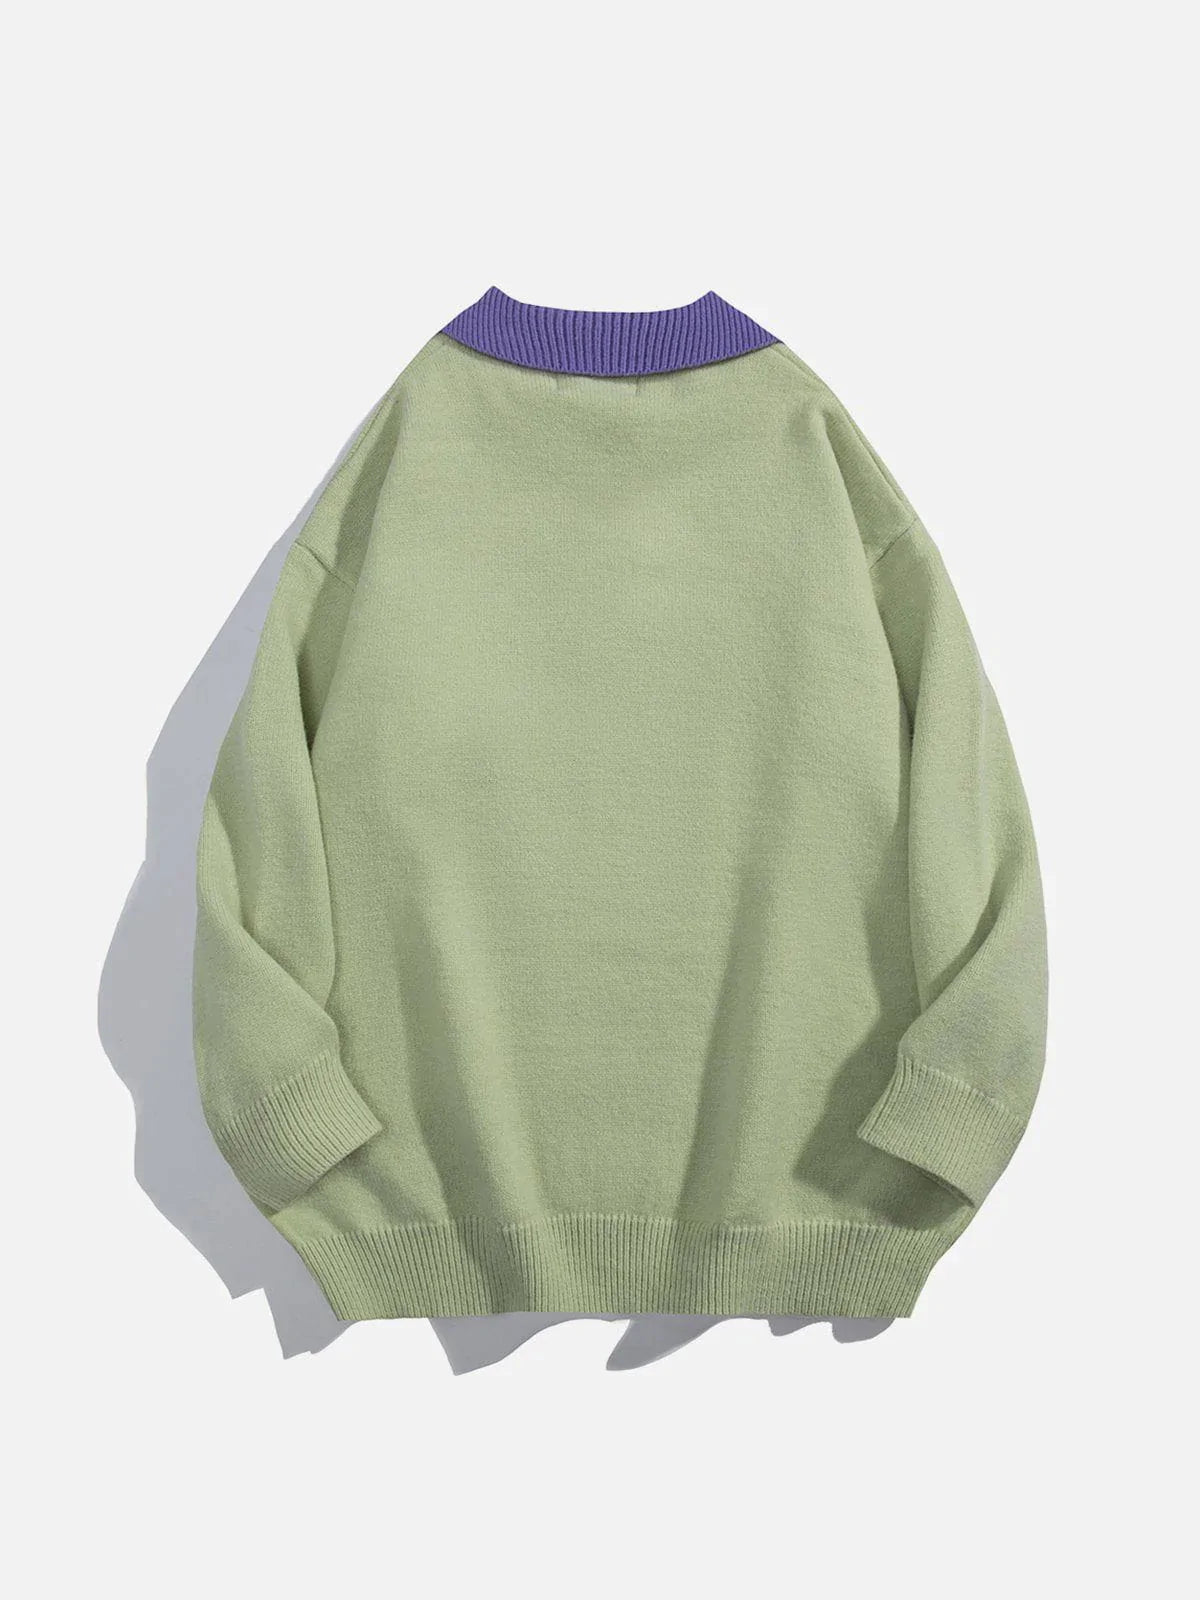 Majesda® - Pocket Rabbit Polo Collar Sweater outfit ideas streetwear fashion